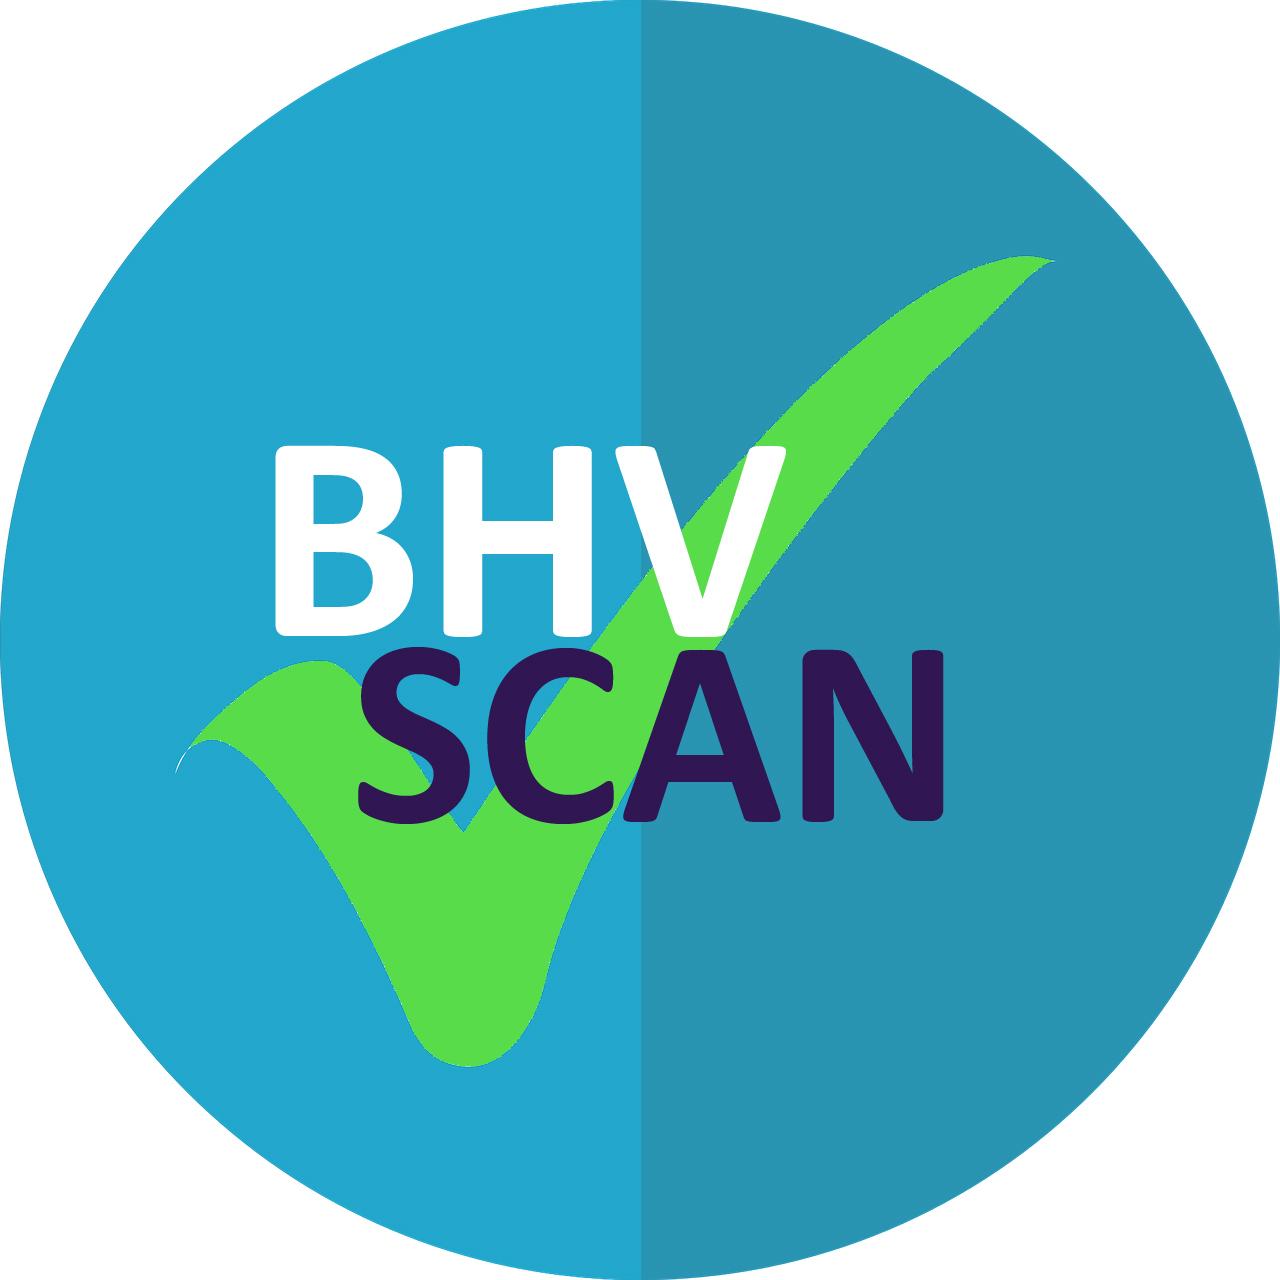 BHV scan